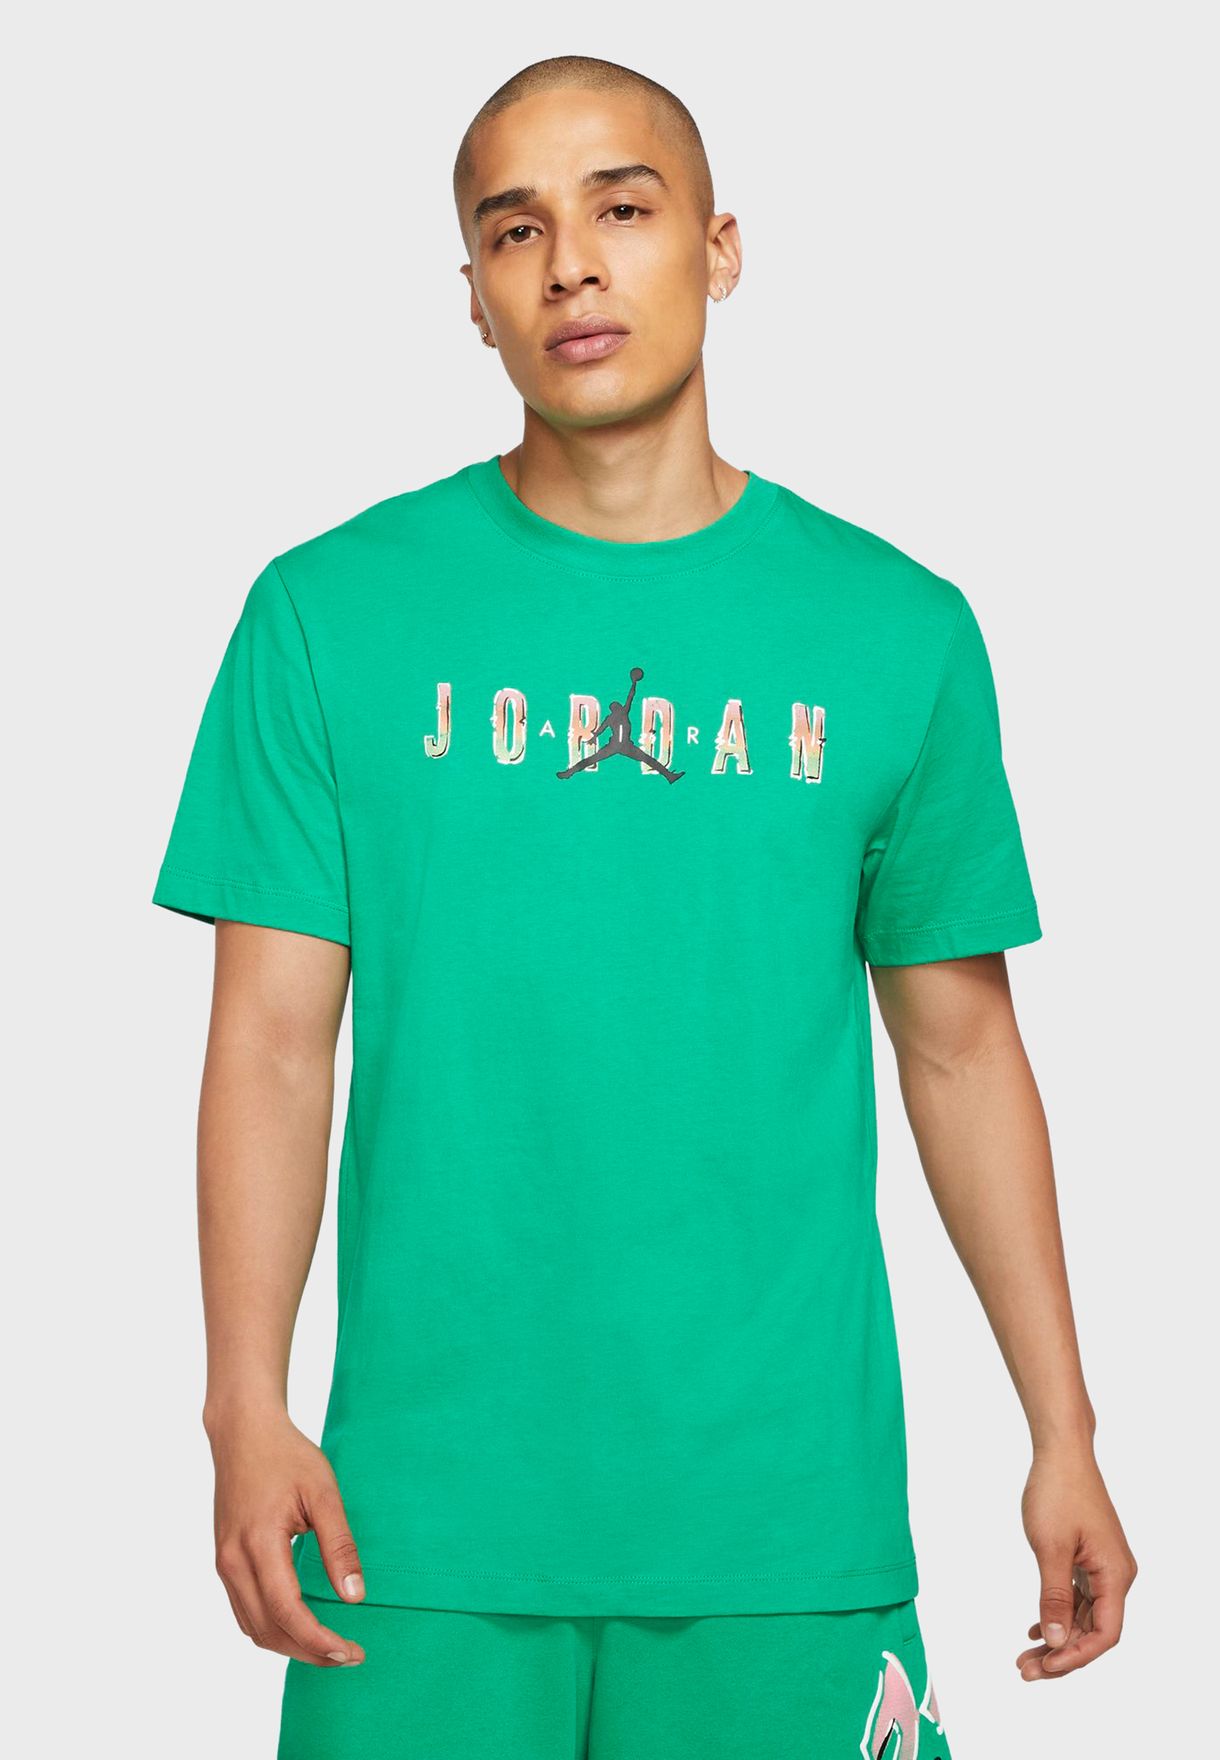 green and orange jordan shirt